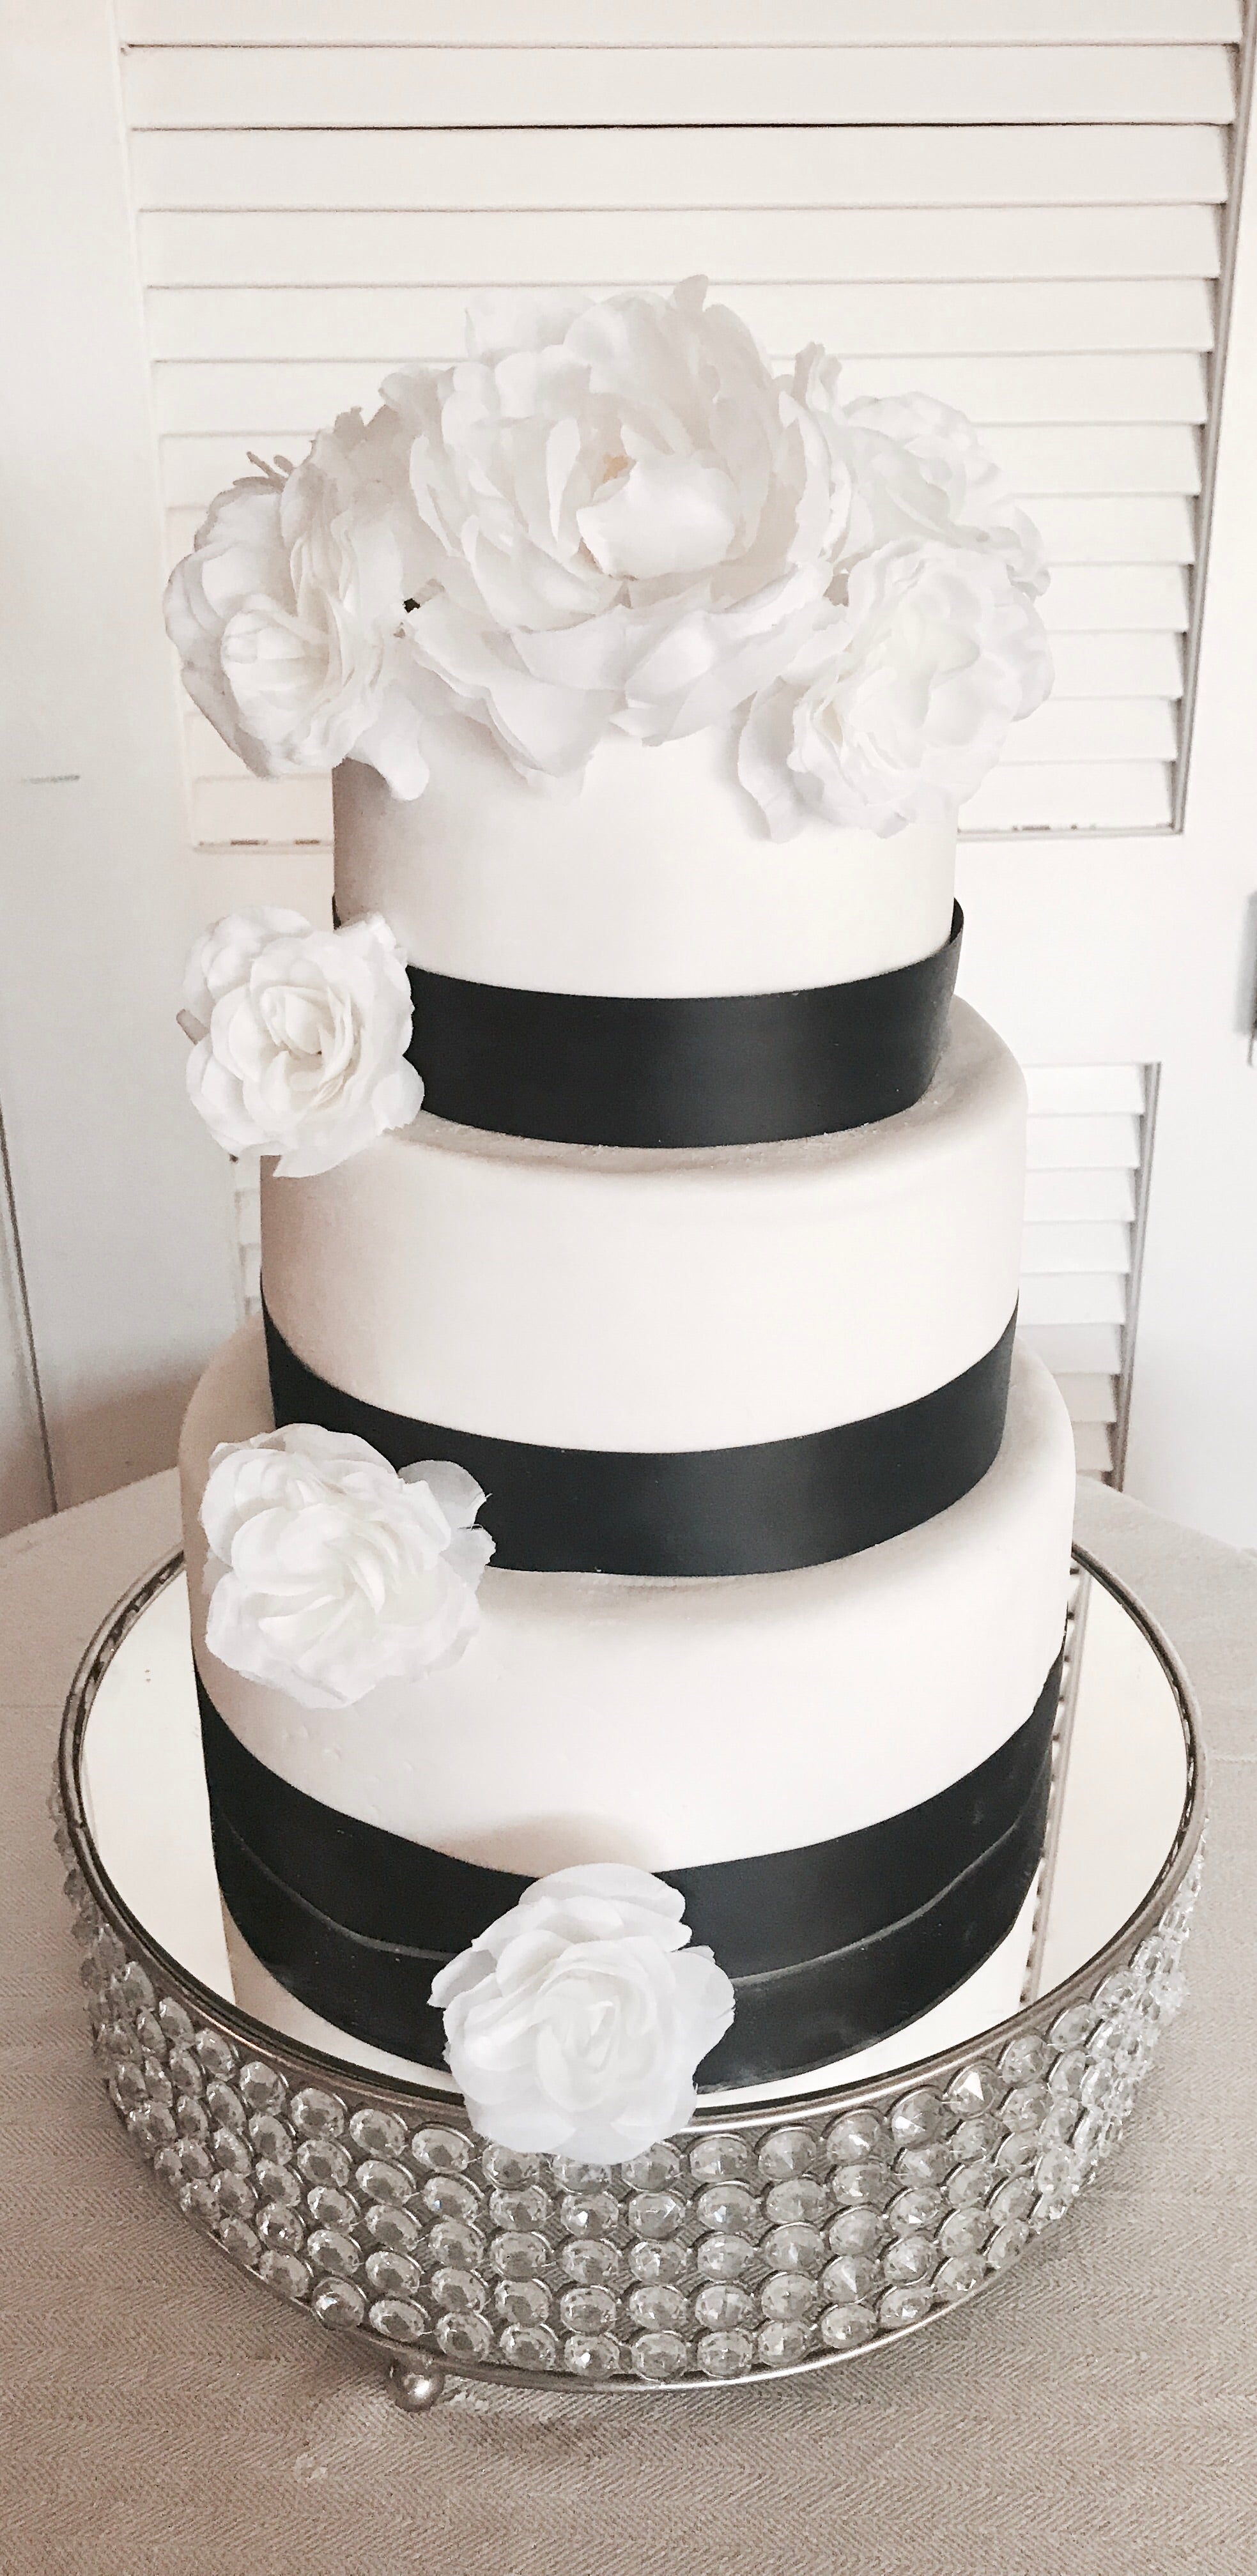 WEDDING CAKE BLACK & WHITE FLORAL